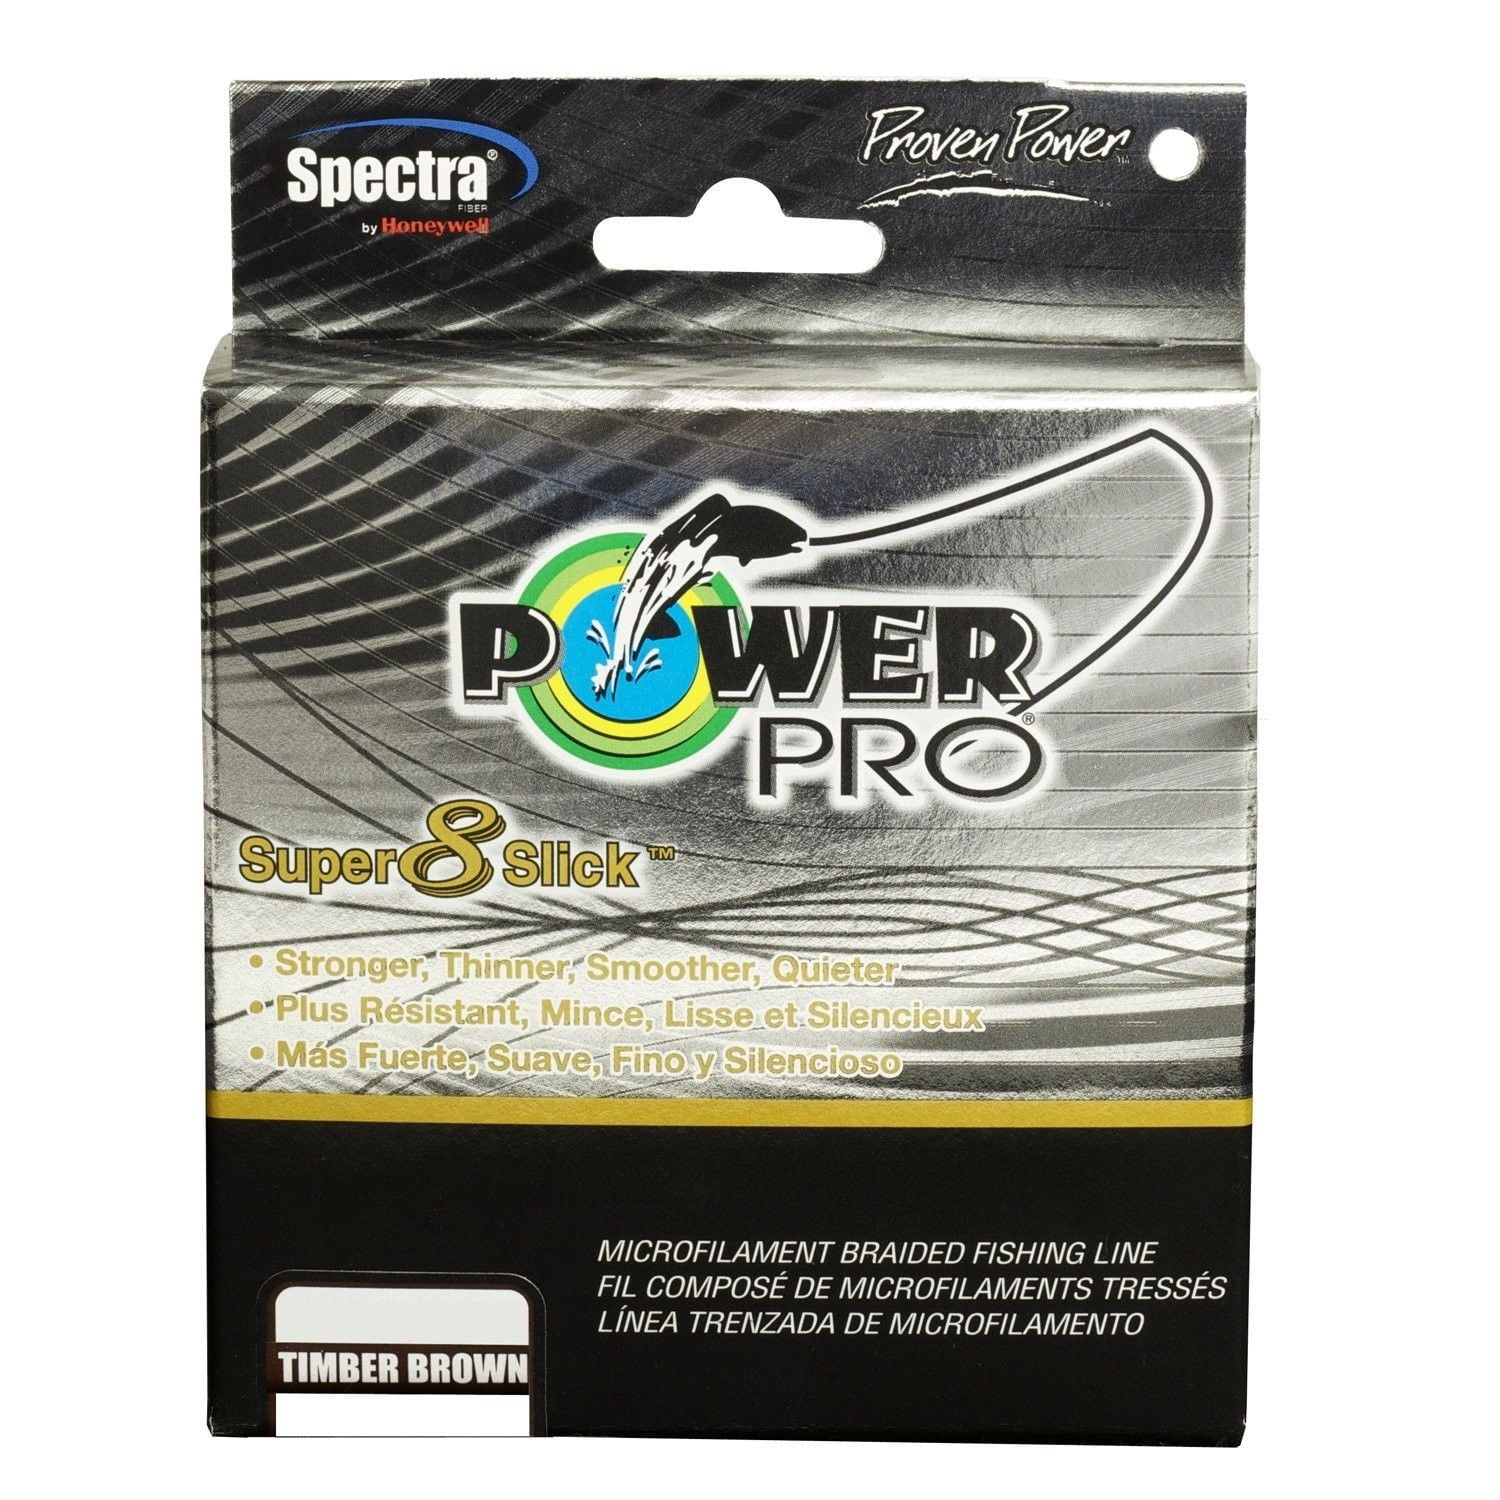 Power Pro PowerPro Super 8 Slick Braided Line 300 Yards, 30 lbs Tested,  0.011 Diameter, Timber Brown 